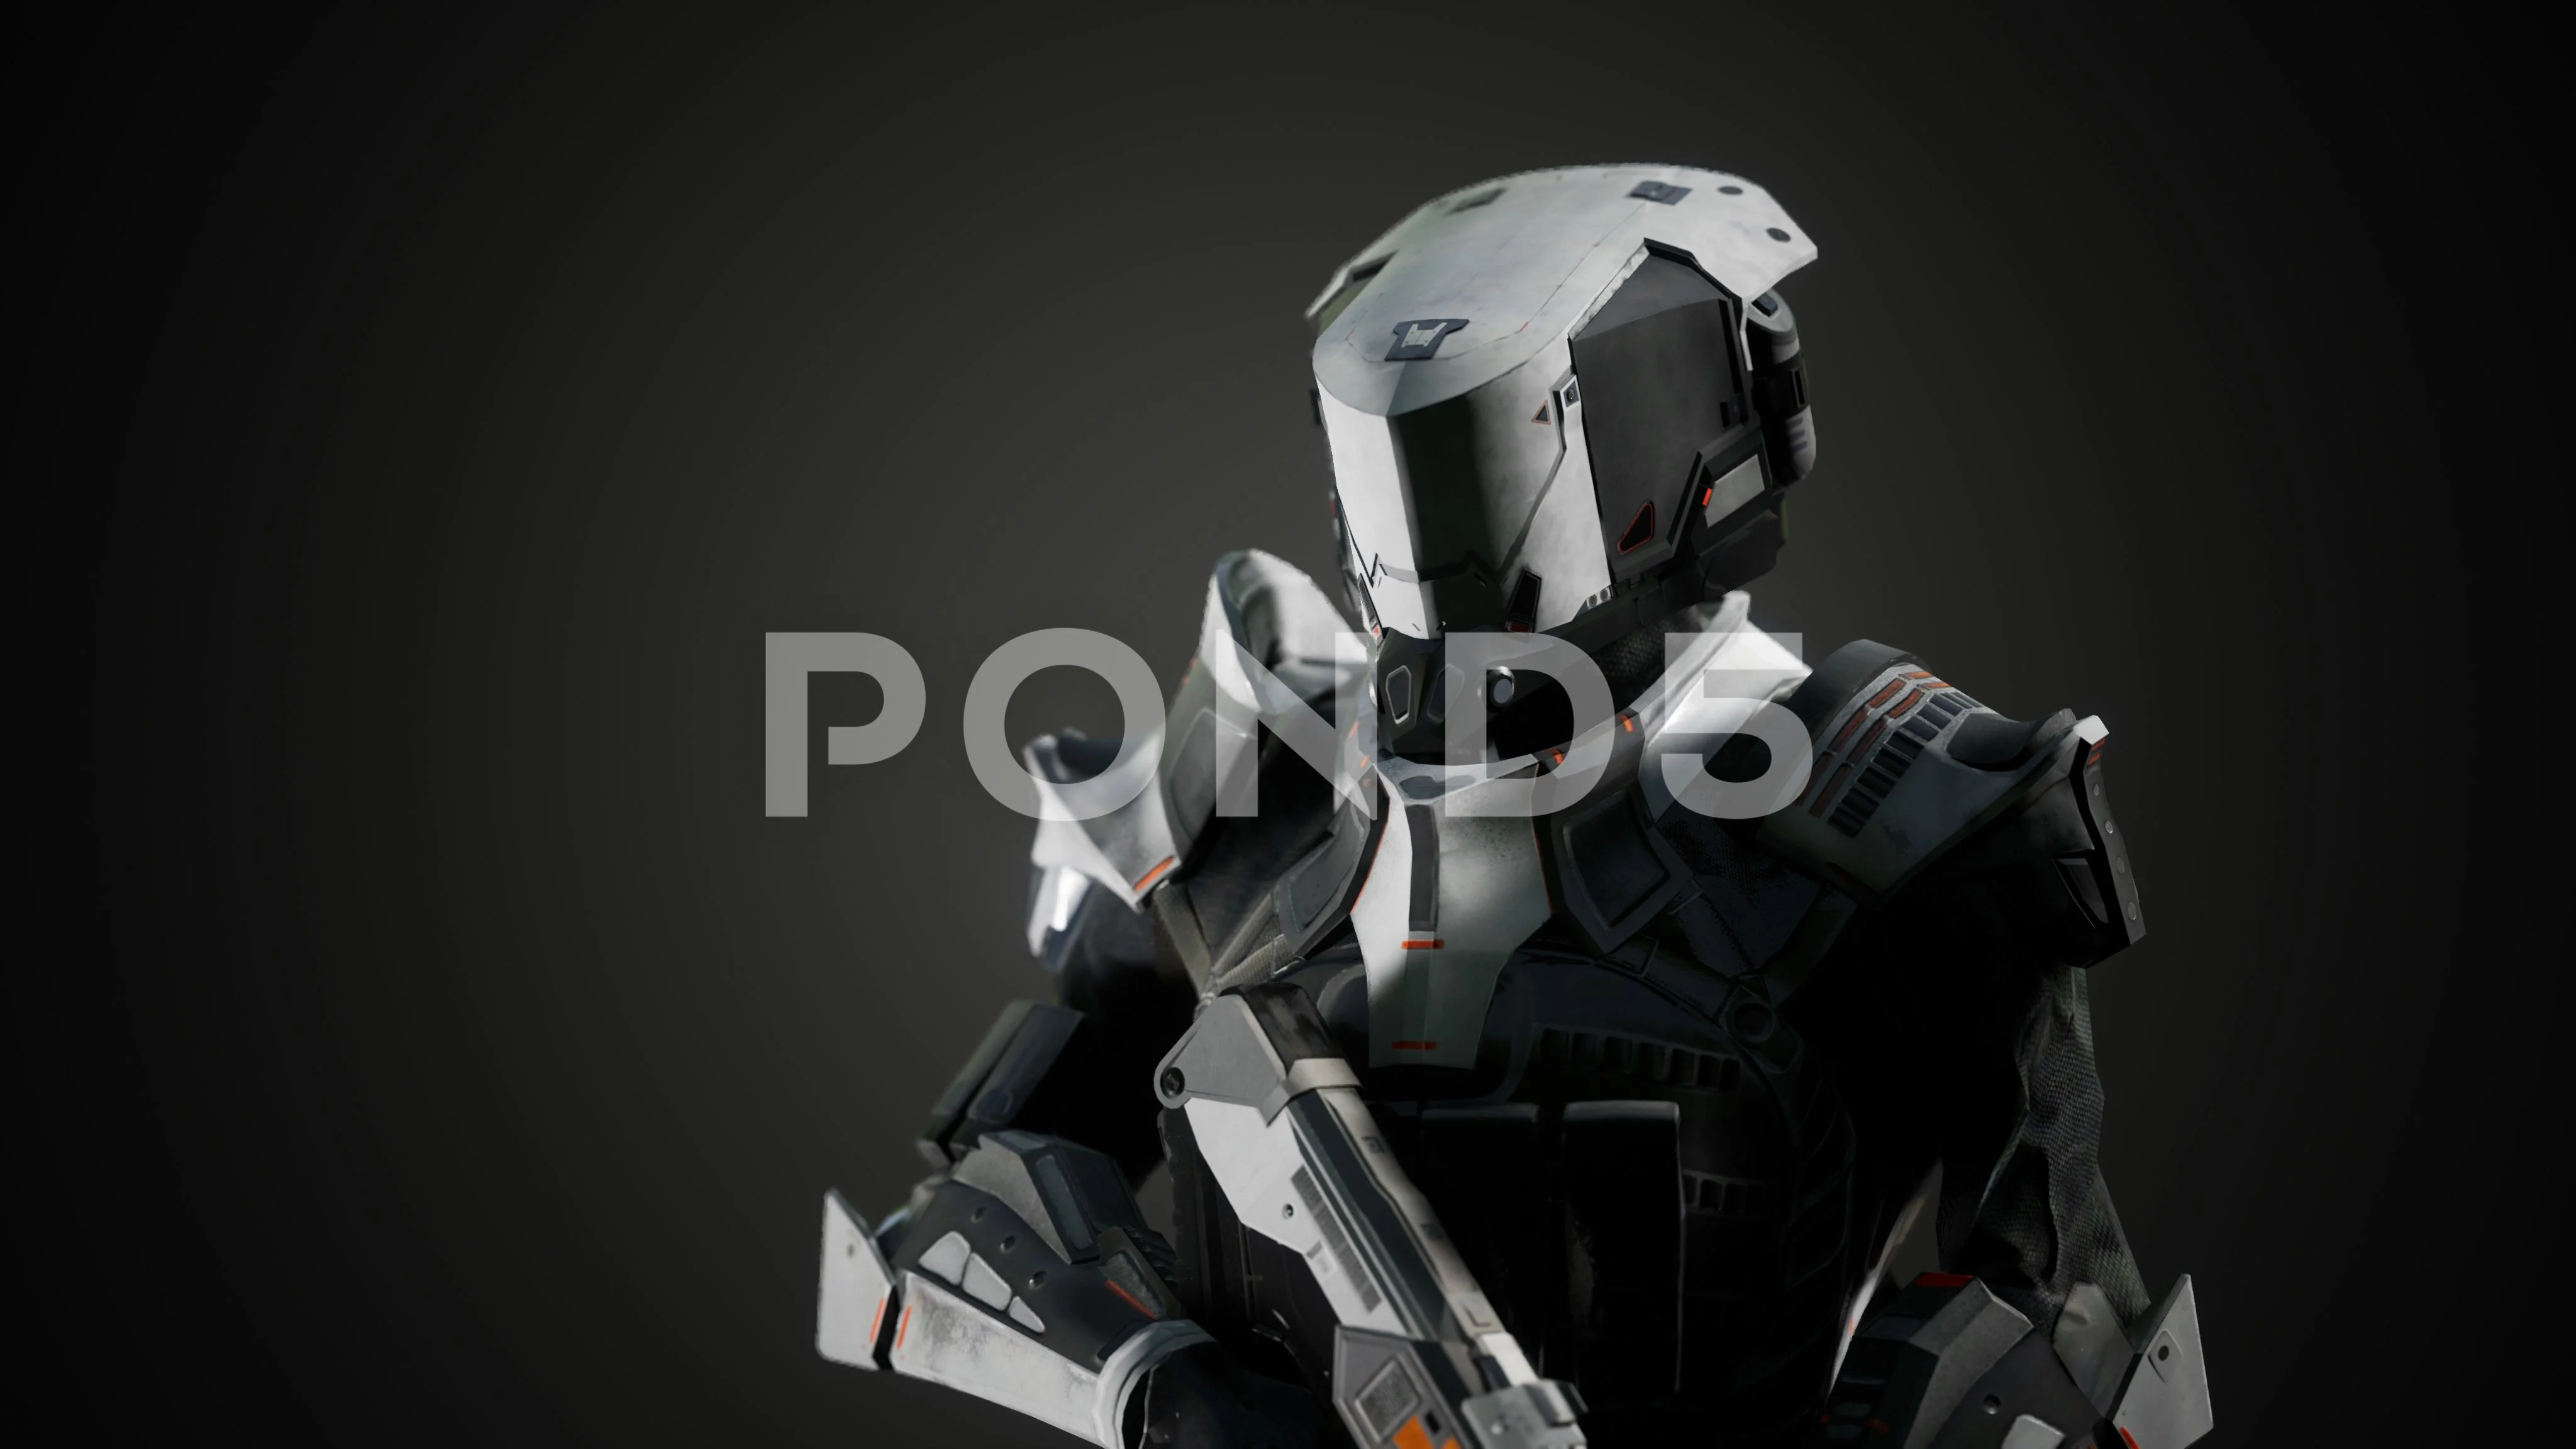 sci fi soldier armor